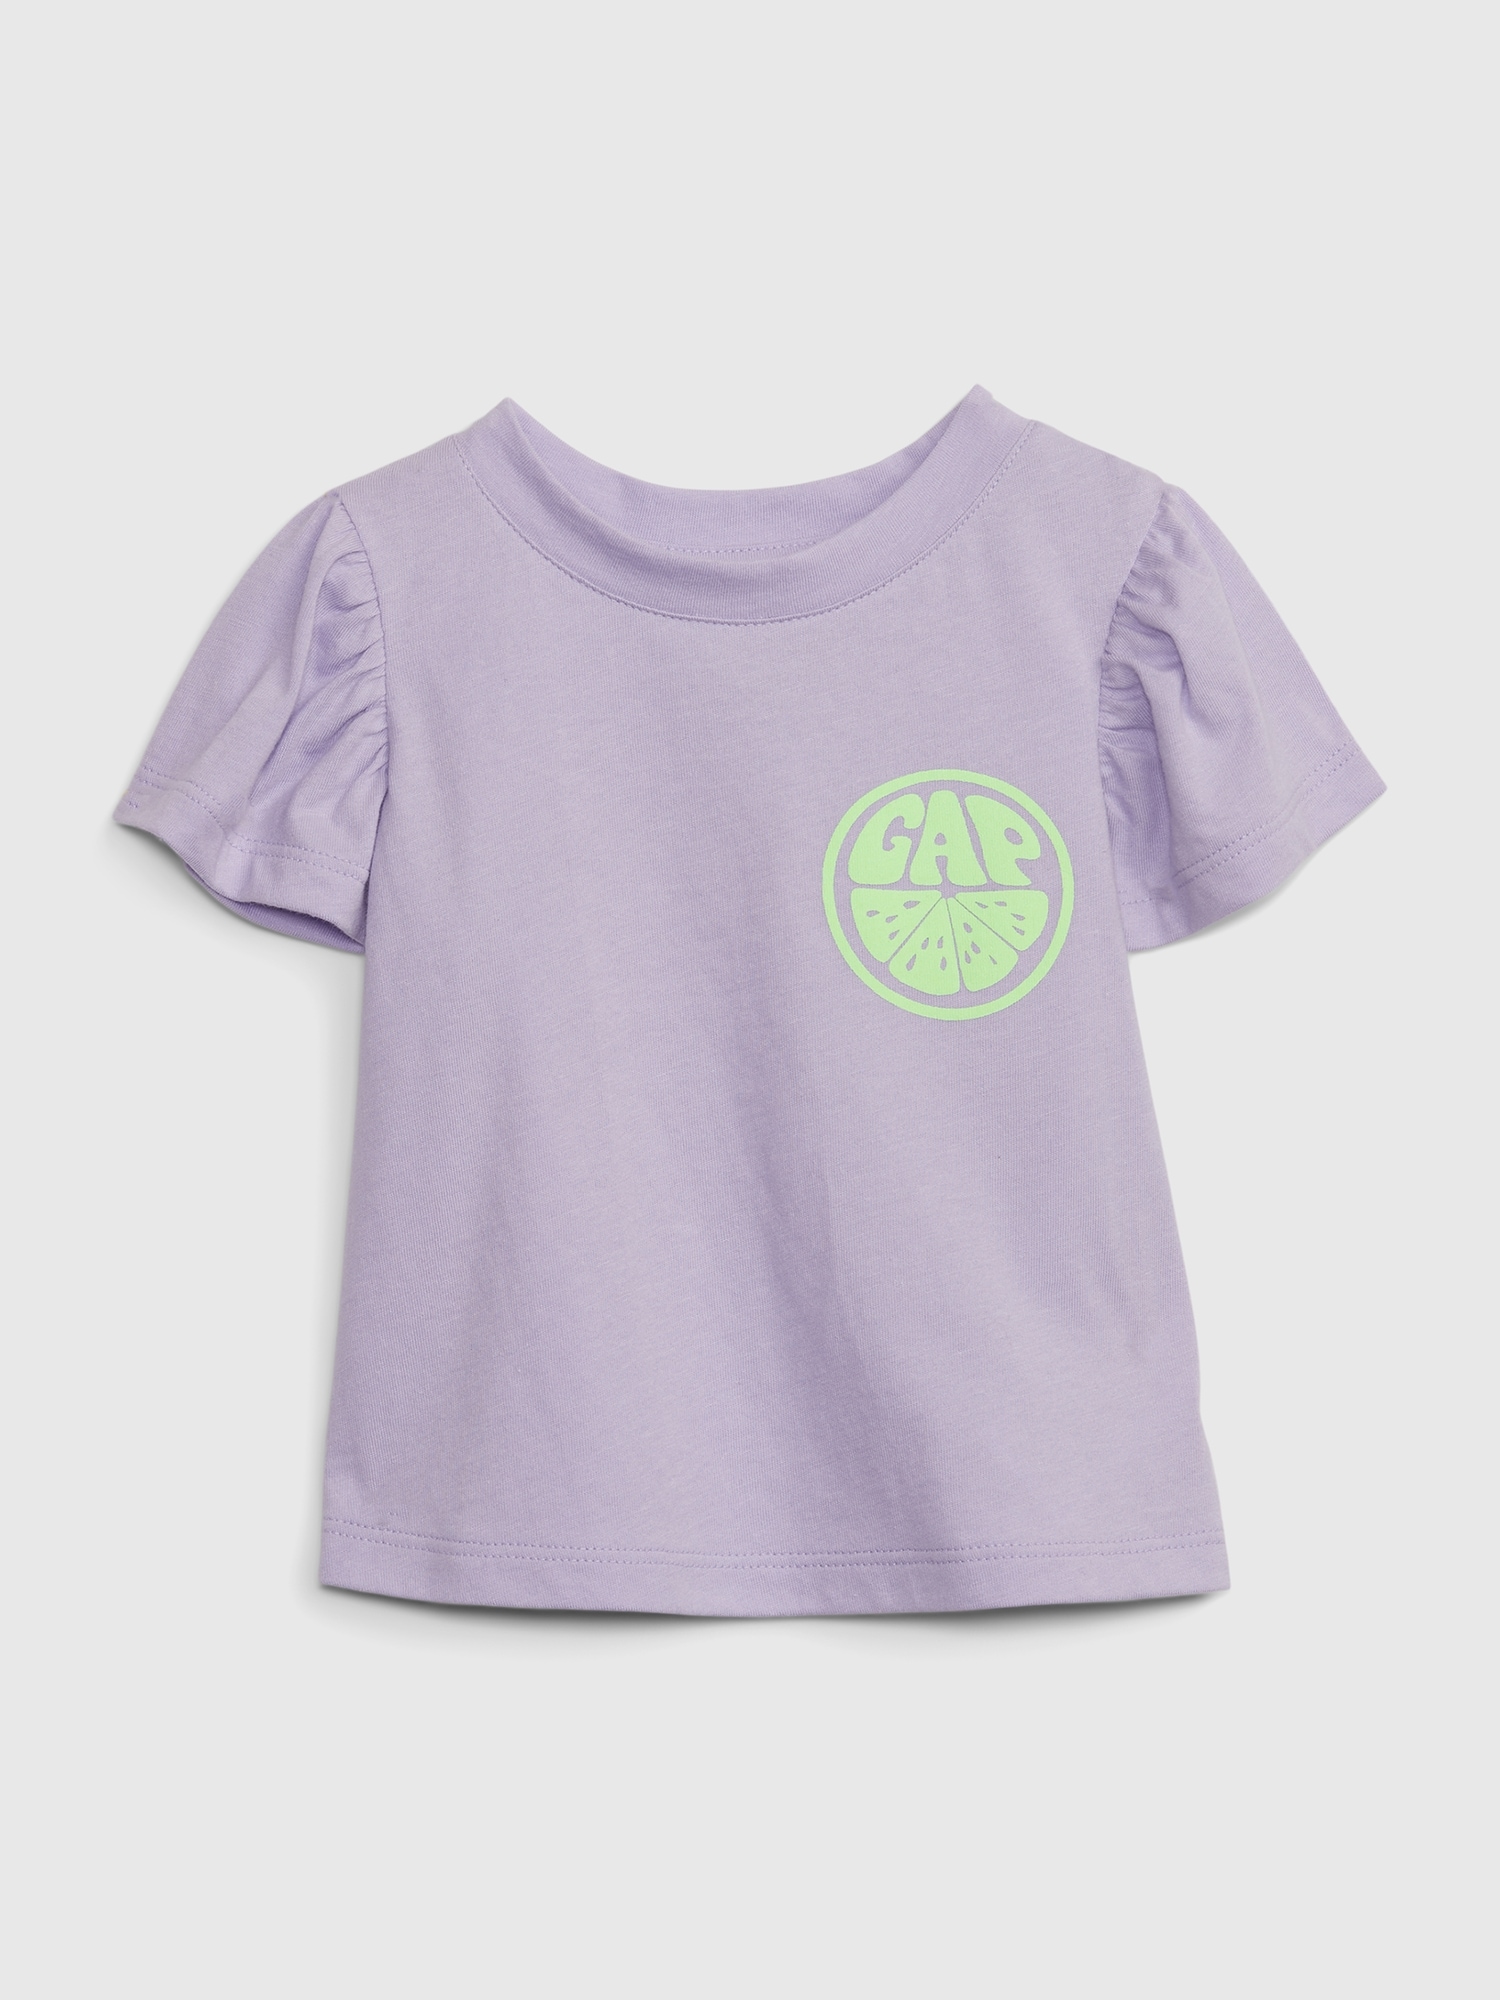 GAP Children's T-shirt With Logo - Girls